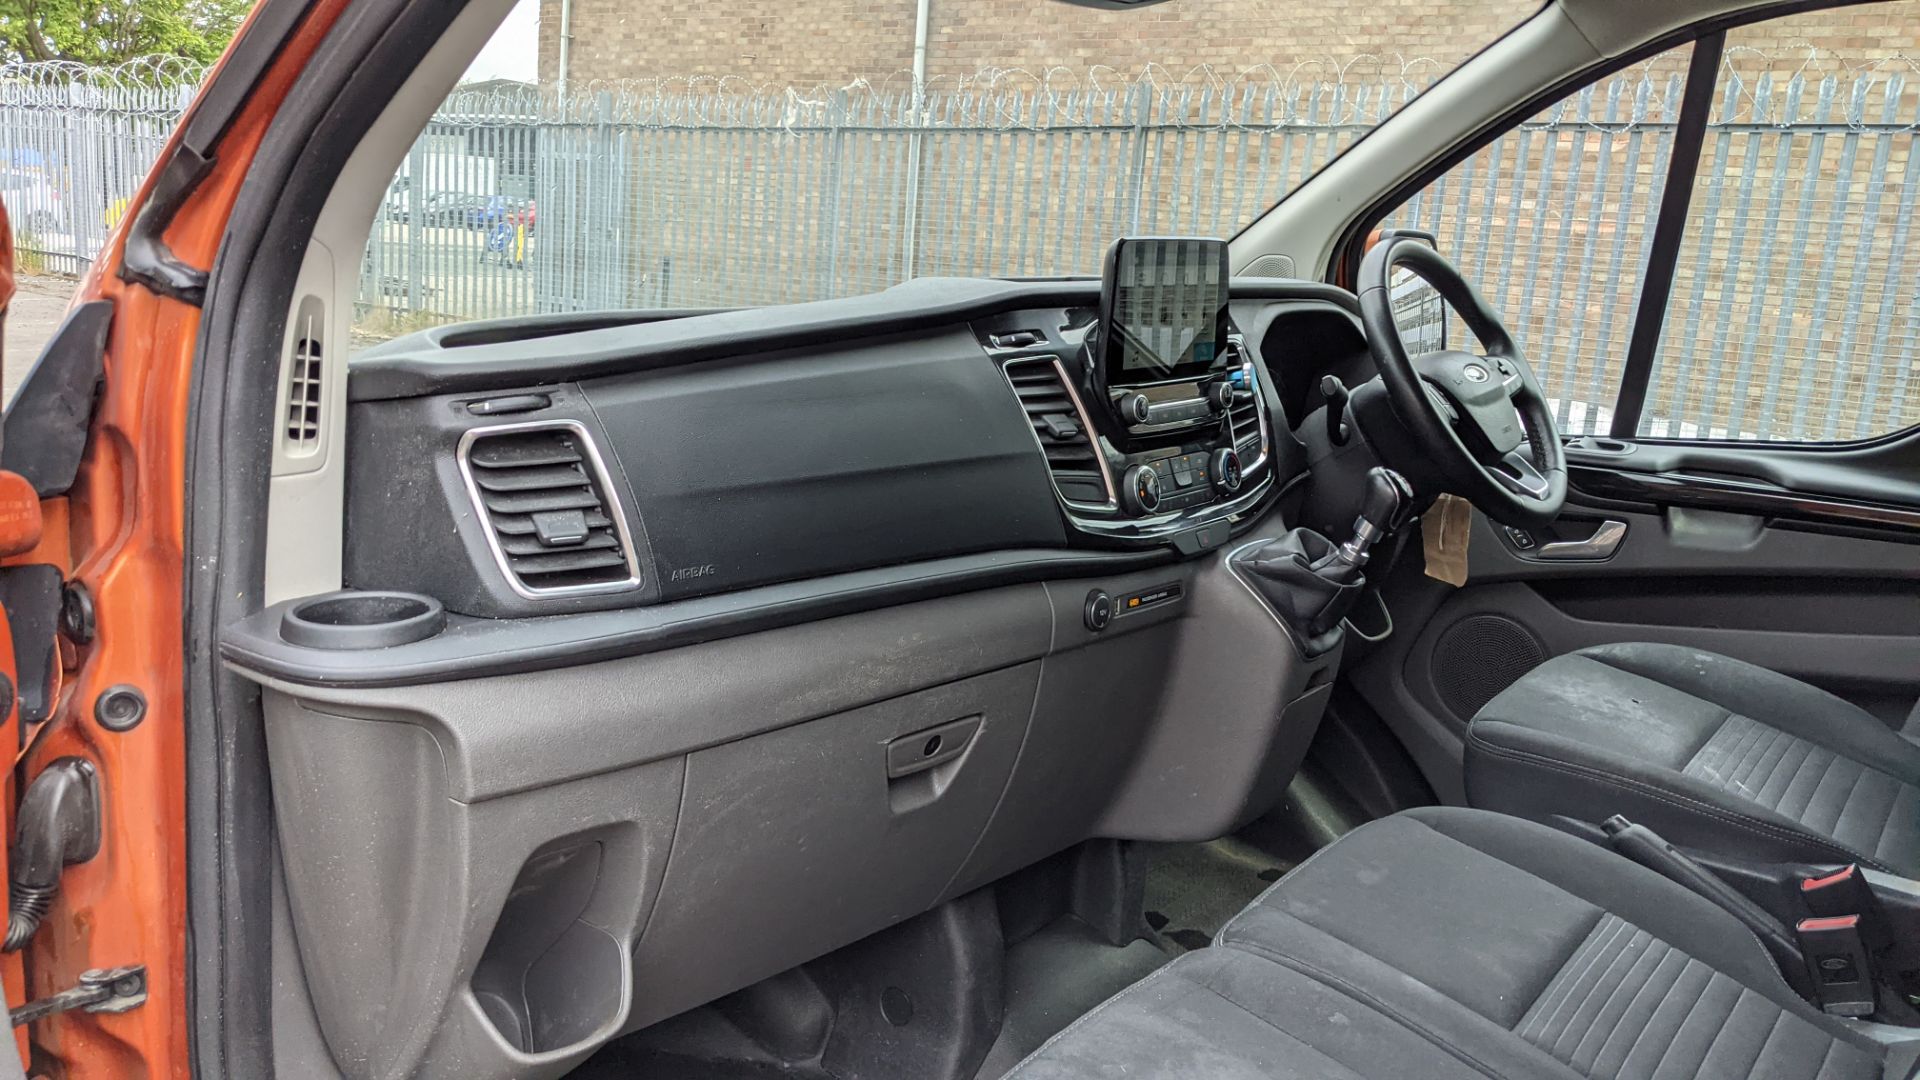 2019 Ford Transit Custom 300 L2 van, Orange Glow. High spec: Heated seats, air con, parking sensors - Image 40 of 66